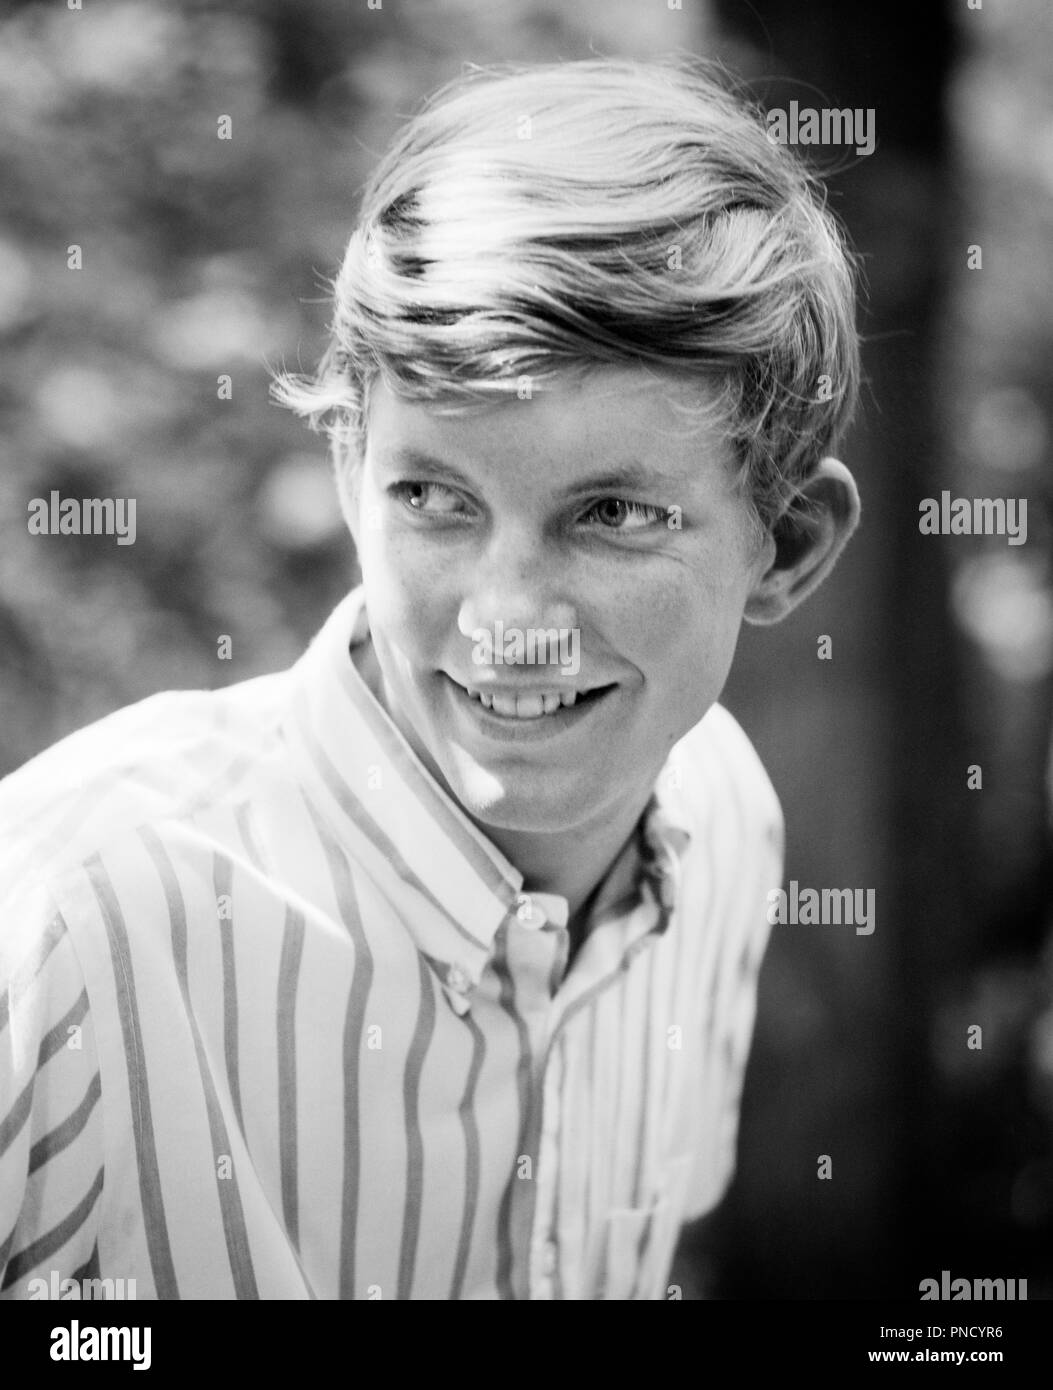 1970s PORTRAIT SMILING BLOND TEEN BOY - b24805 HAR001 HARS JOYFUL STYLISH SUNLIT TEENAGED PLEASANT BLACK AND WHITE CAUCASIAN ETHNICITY HAR001 OLD FASHIONED Stock Photo